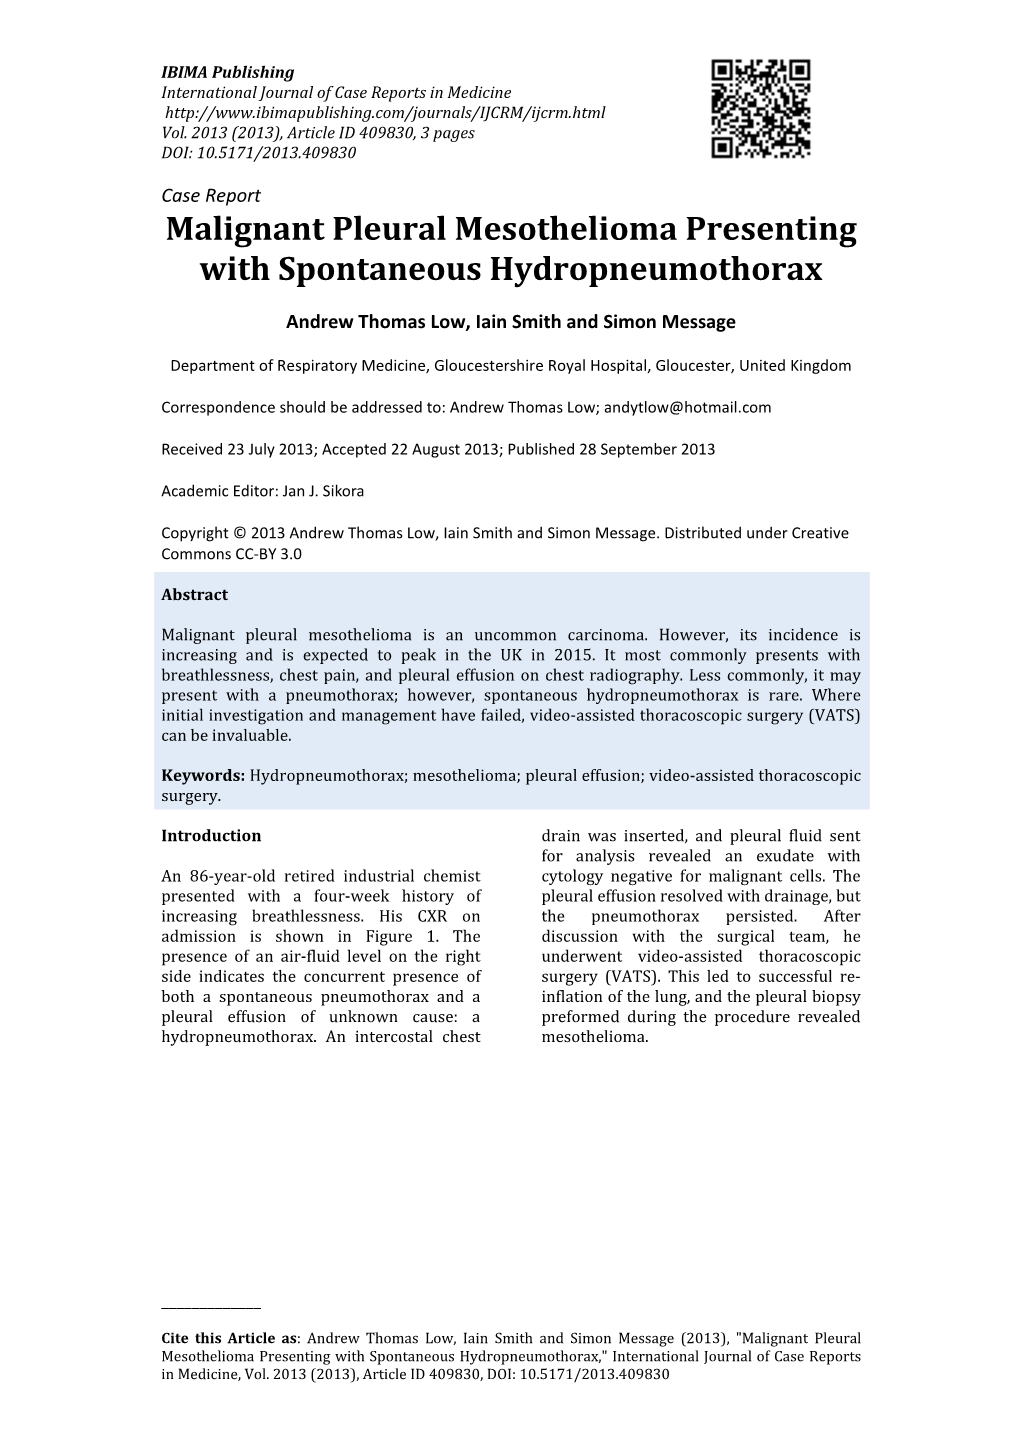 Malignant Pleural Mesothelioma Presenting with Spontaneous Hydropneumothorax